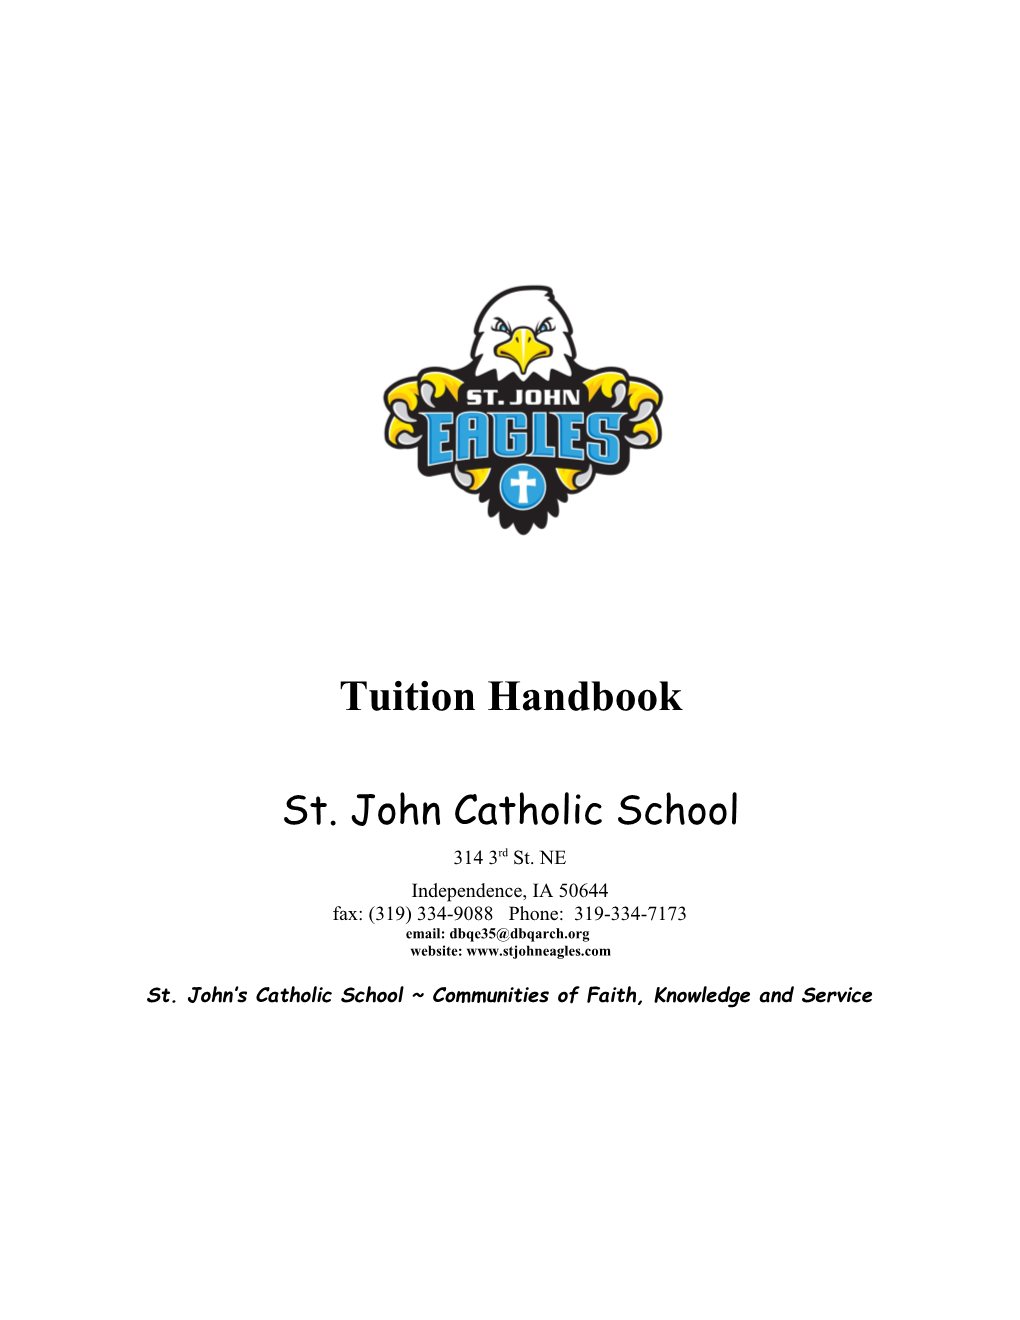 St. John S Catholic School Communities of Faith, Knowledge and Service